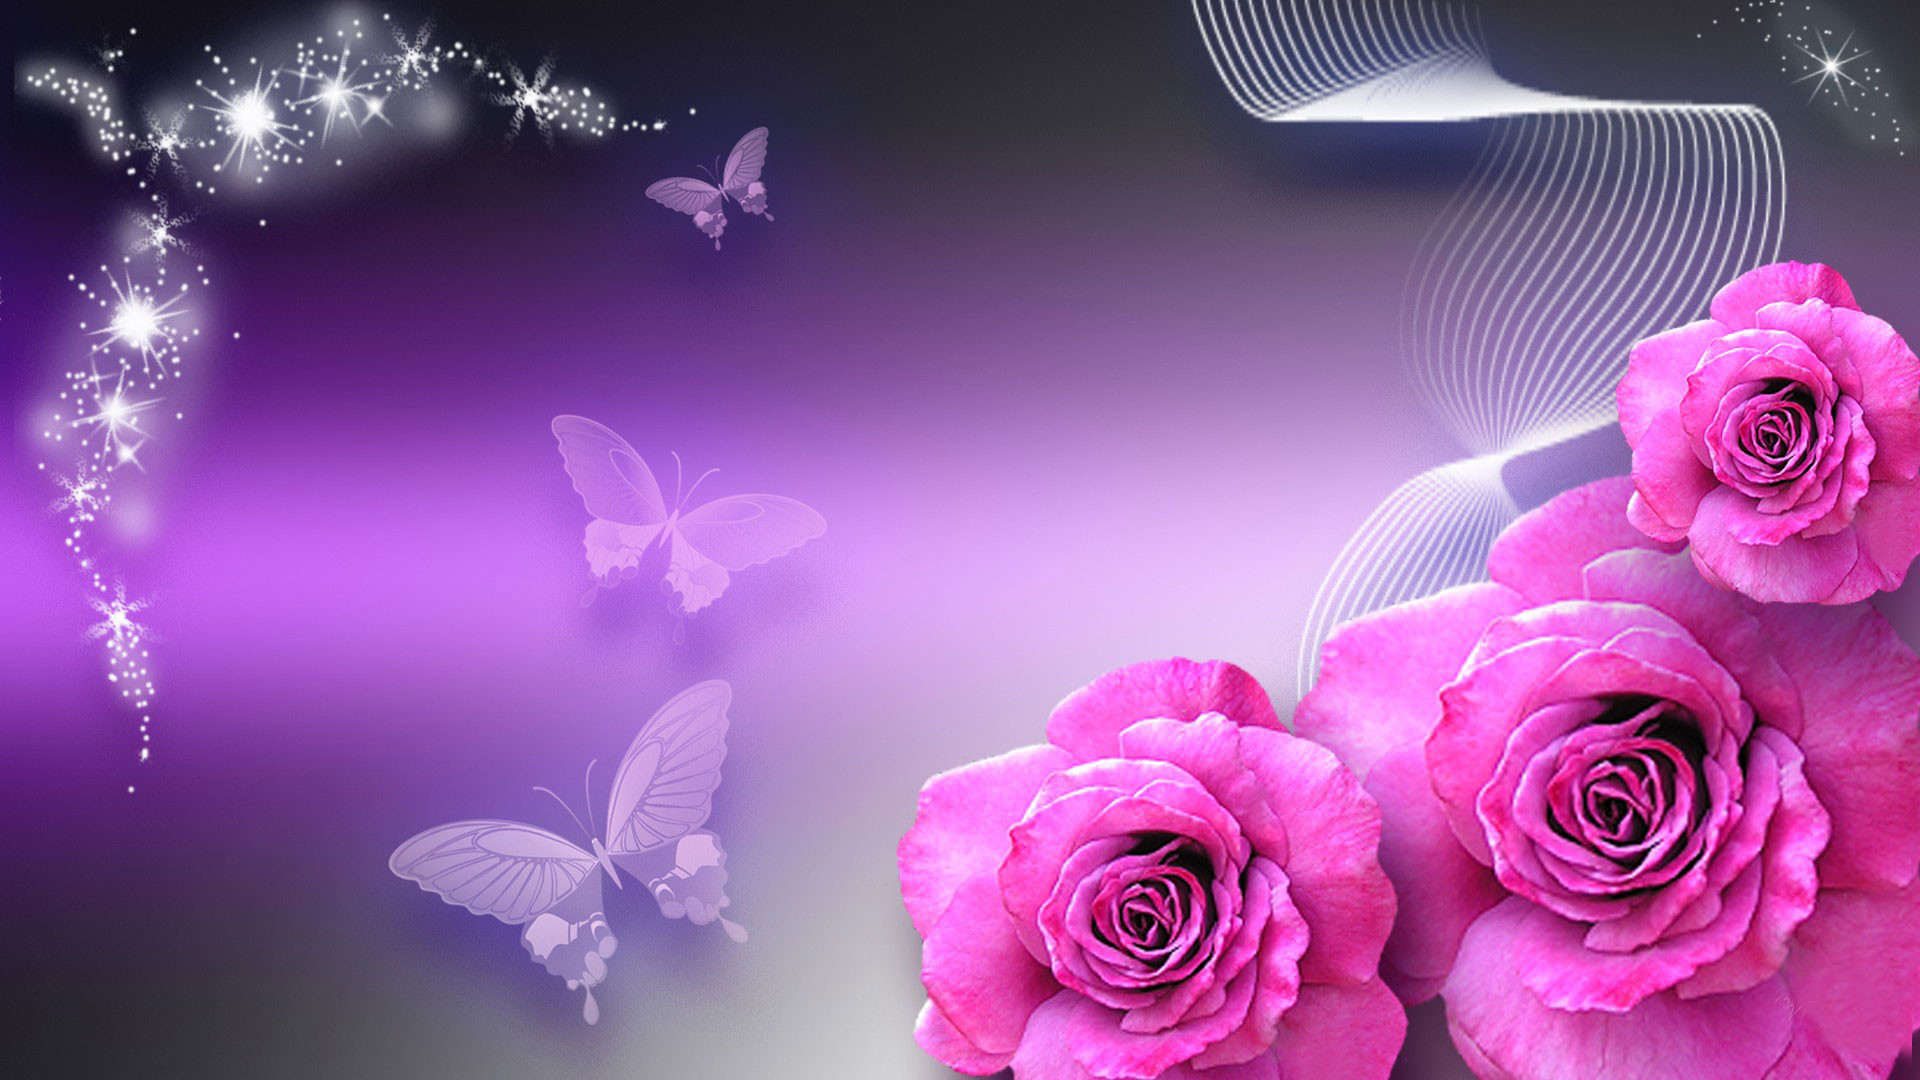 1920x1080 hd pics photos attractive rose flowers fancy glittering butterflies hd  quality desktop background wallpaper